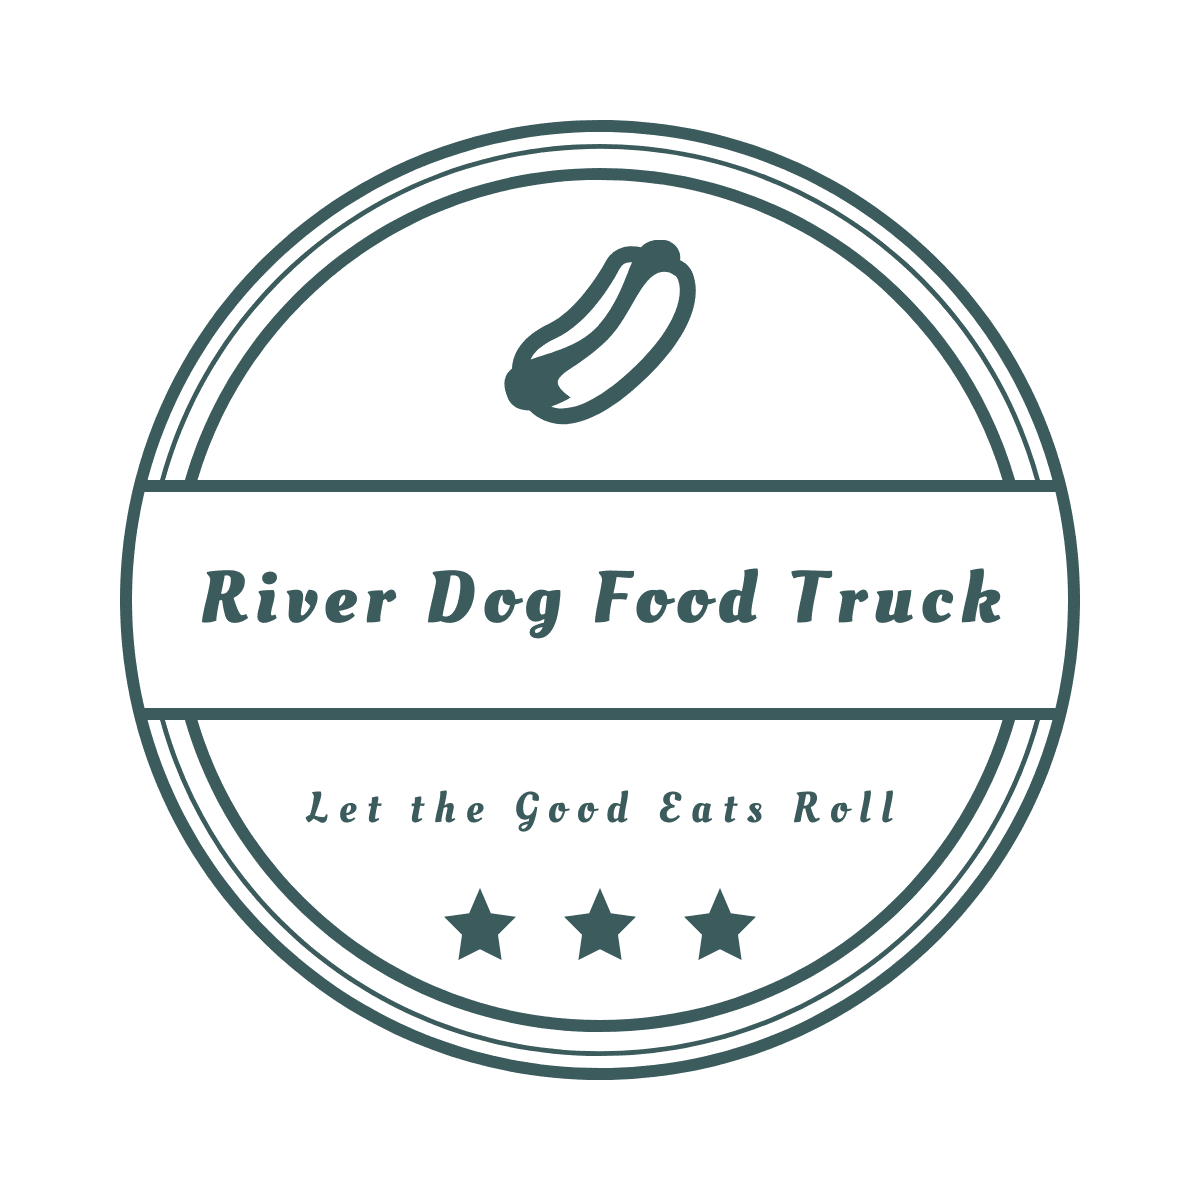 River Dog Food Truck